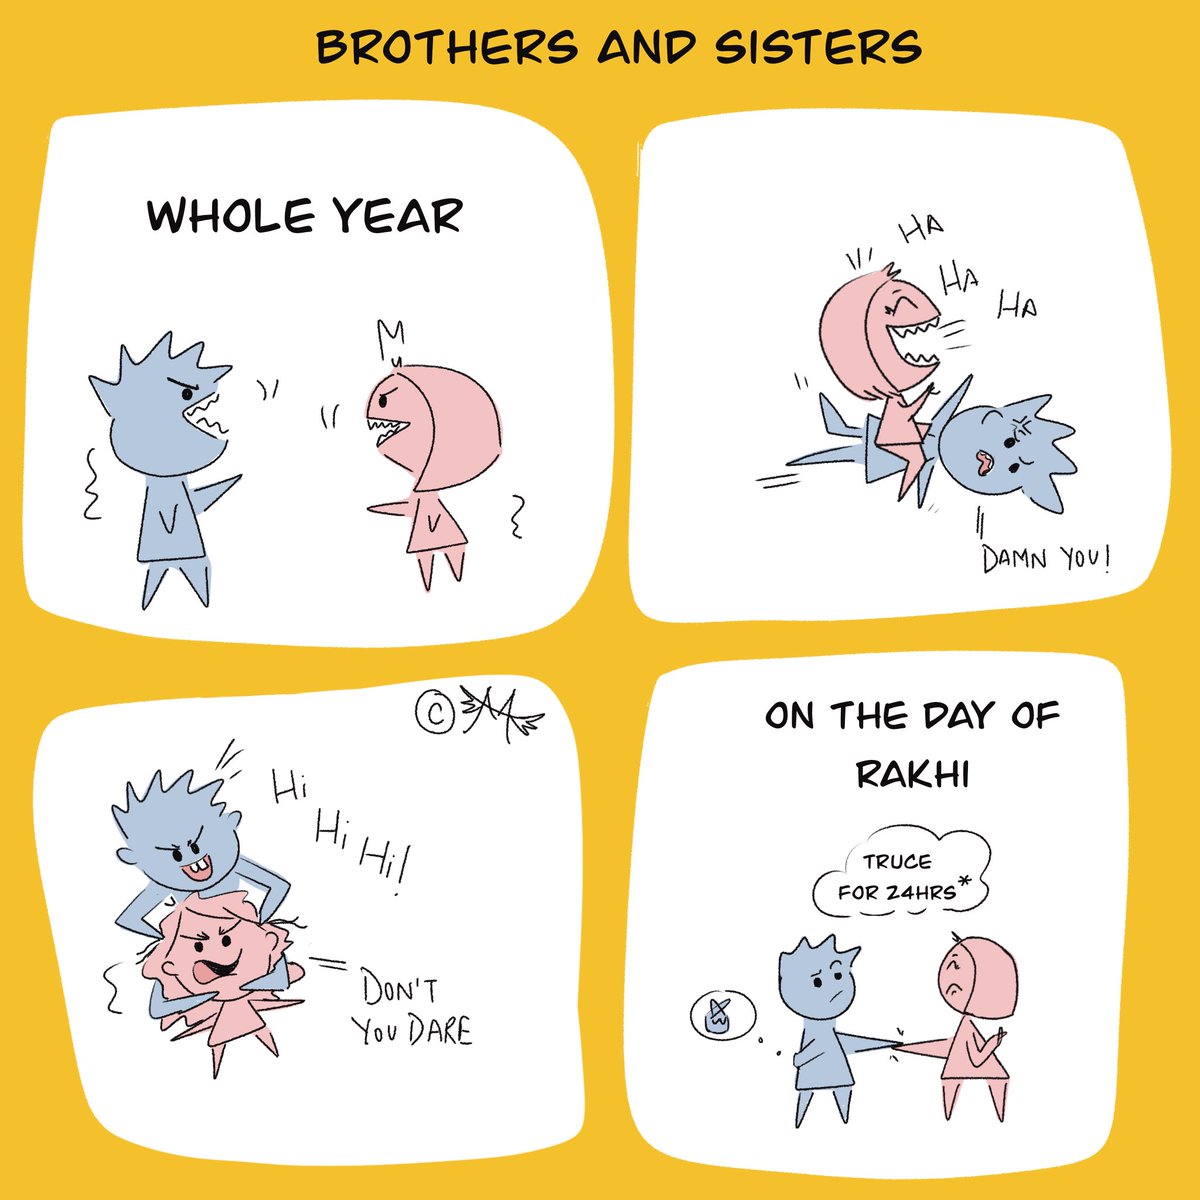 Brothers and sisters 🤓

#indiancomic #ComicArt #Rakhi